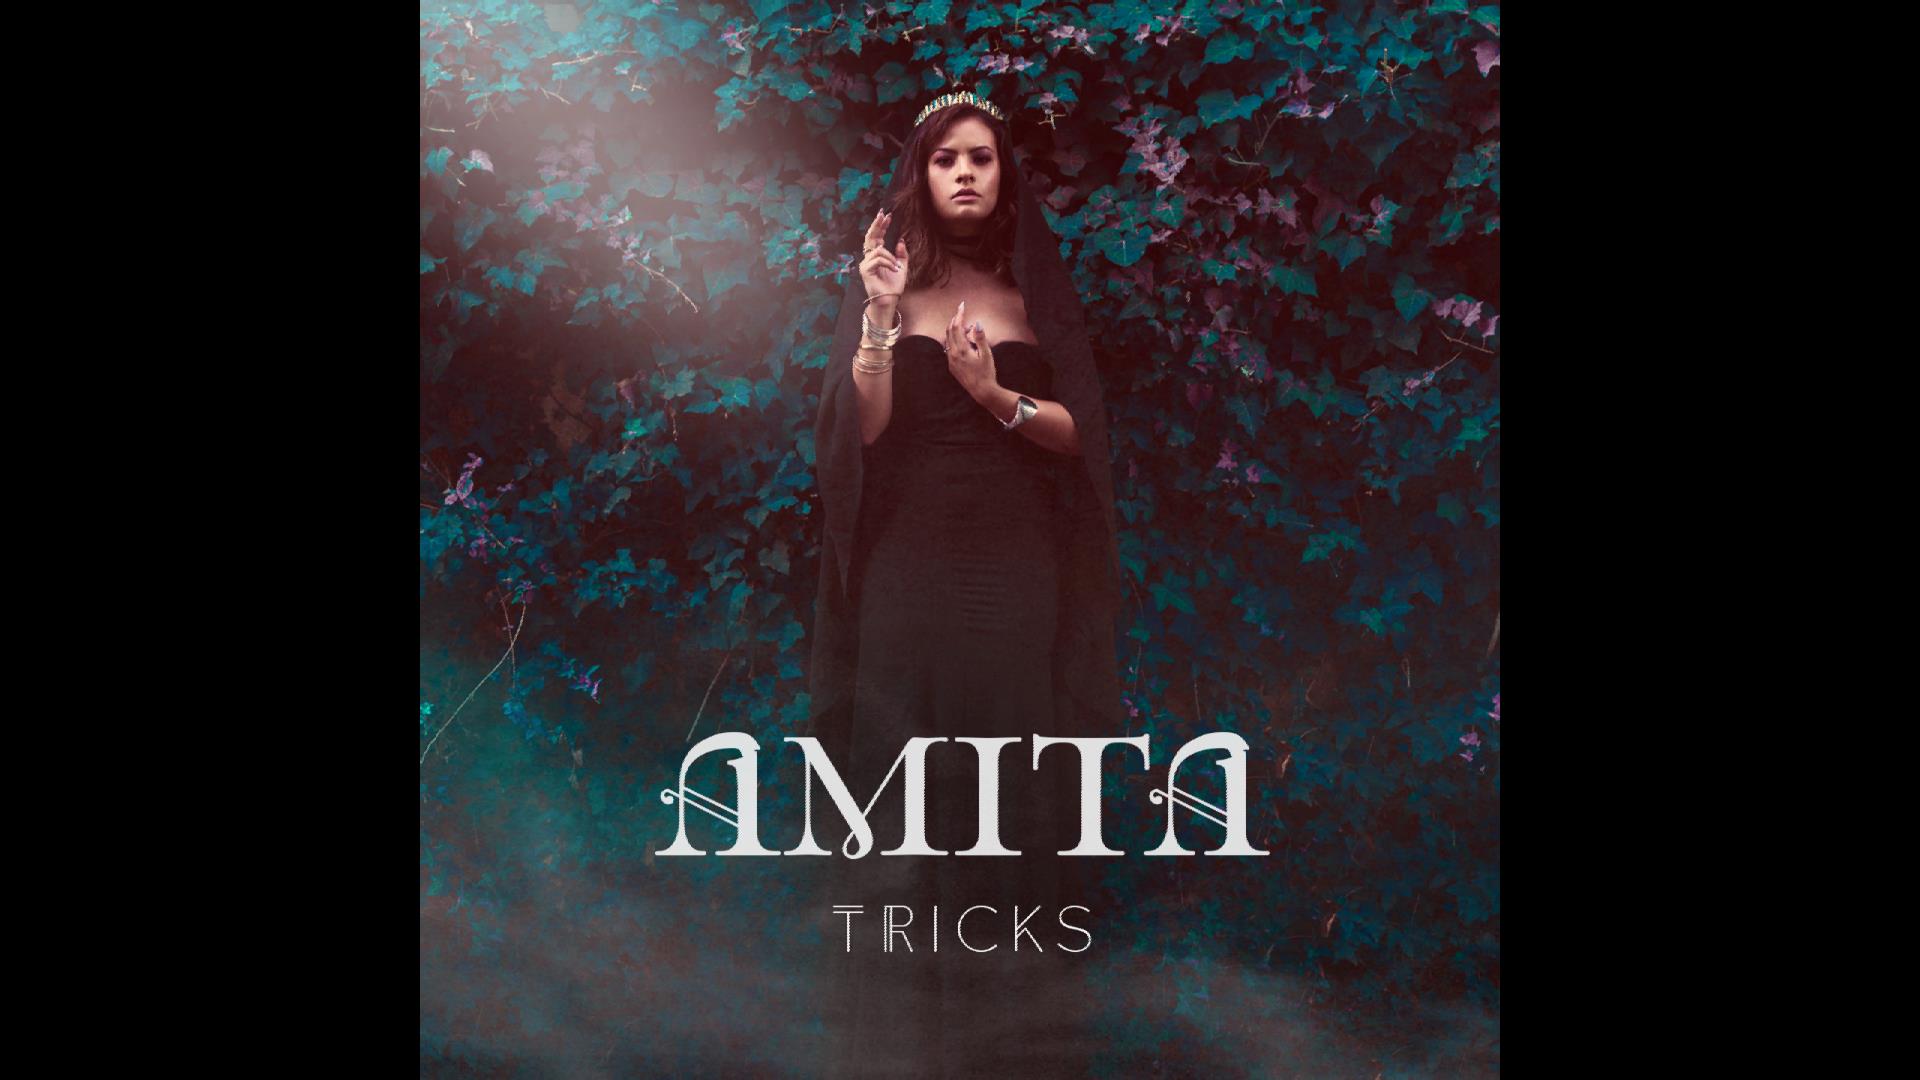  Amita – “Tricks”